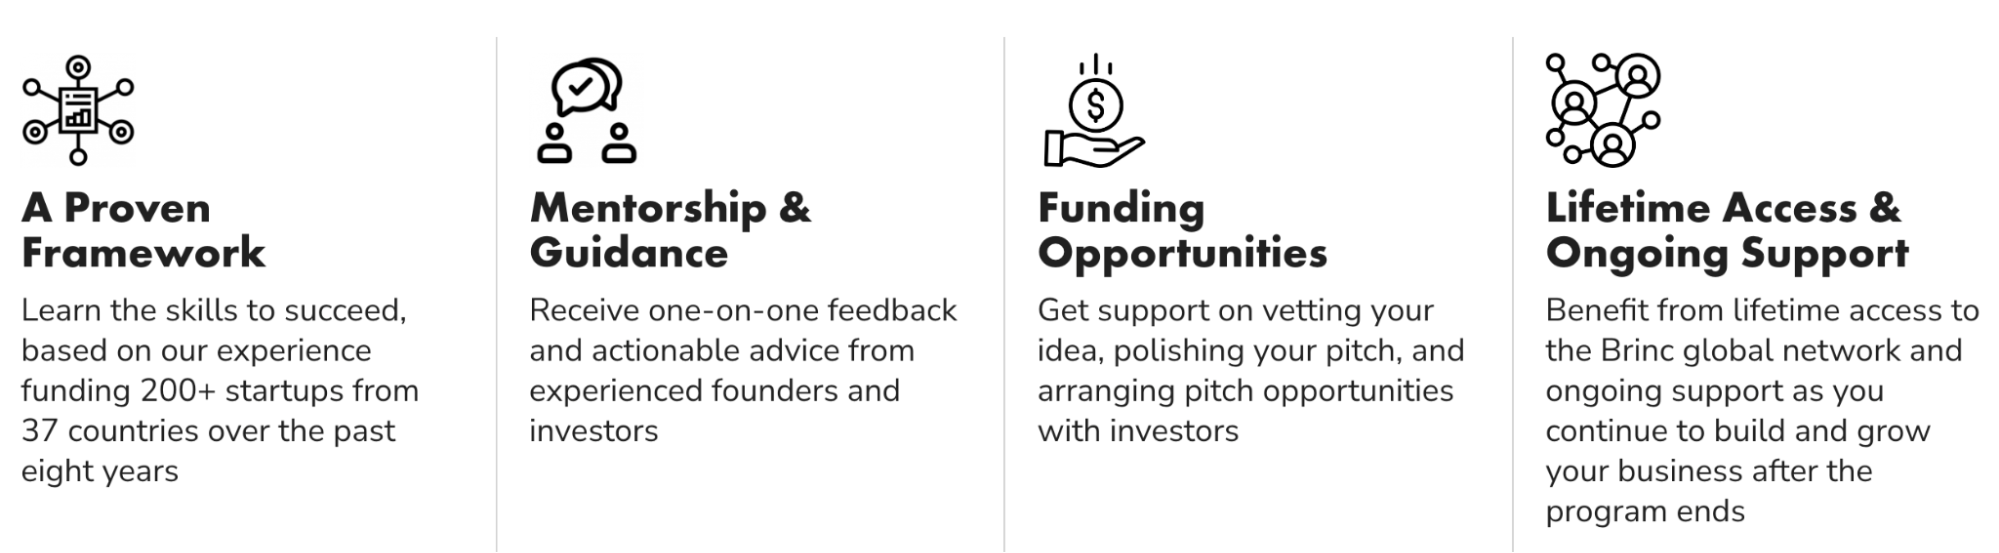 Brinc accelerator programs provide mentorship, funding and access for startups. Source: Brinc